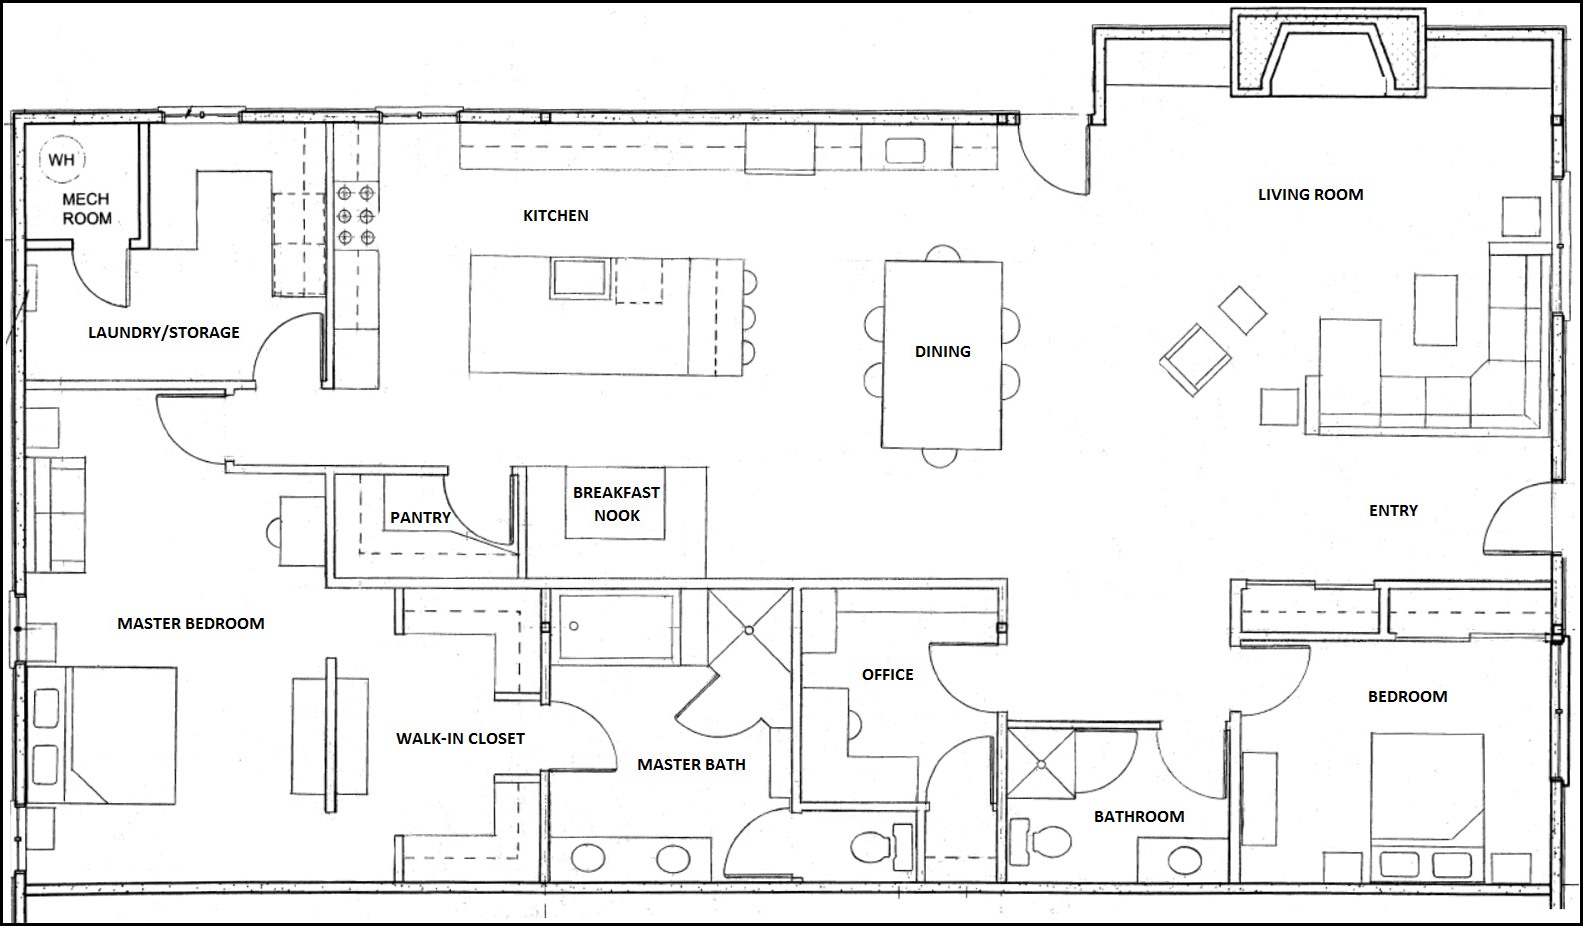 Google Sketchup Floor Plan Template Review Home Decor